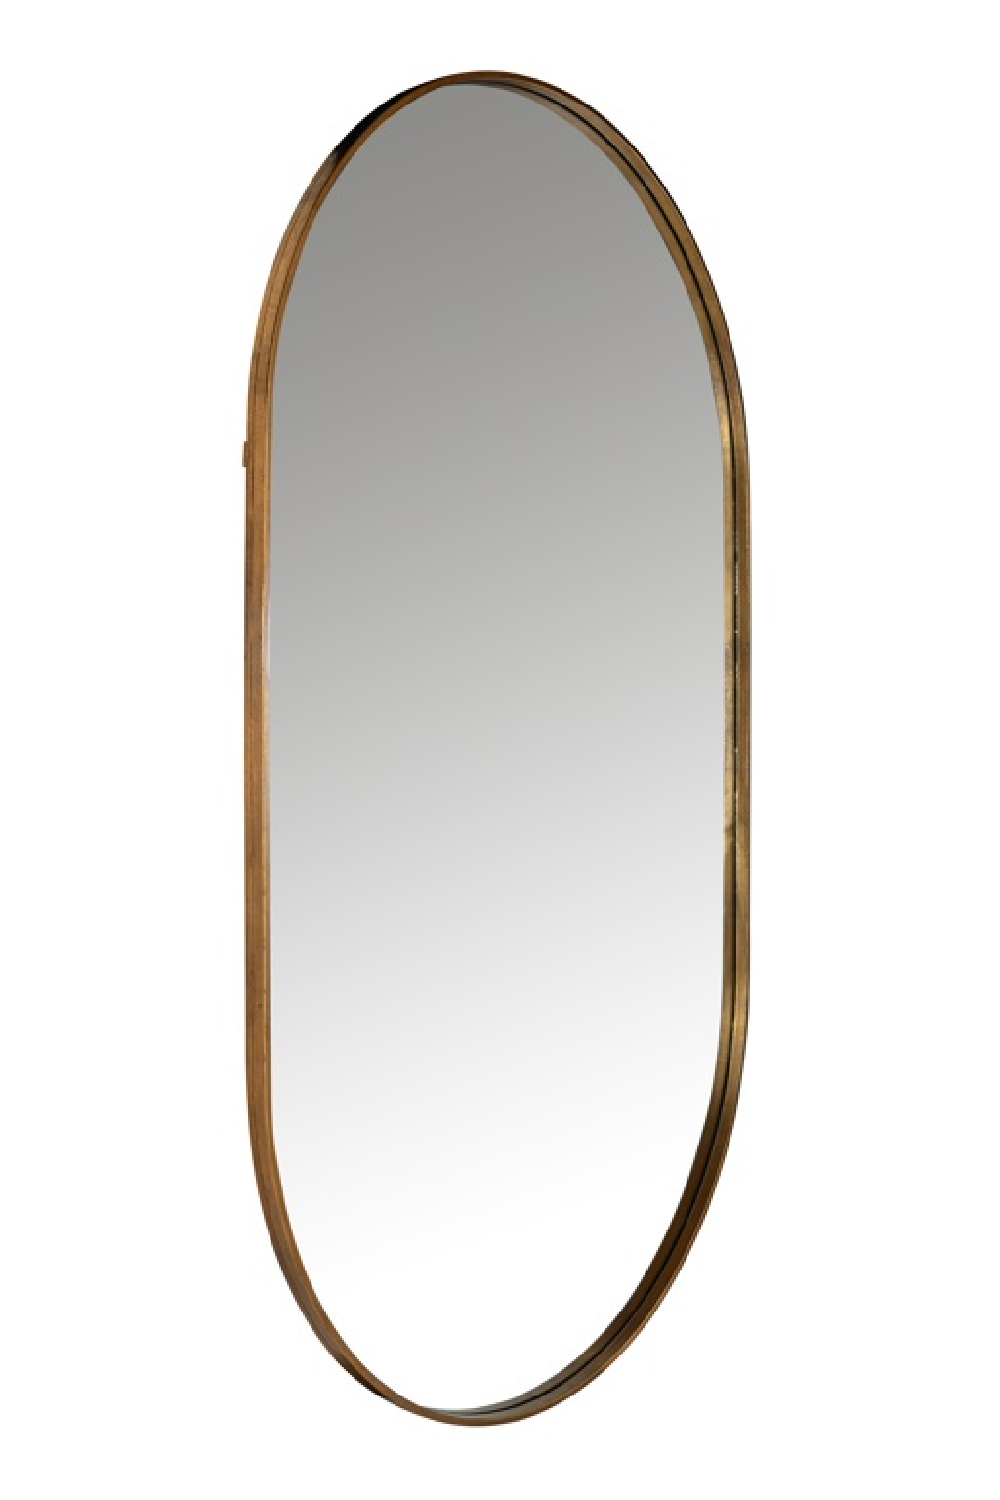 Gold Oval Mirror | OROA Skylar | Oroa.com